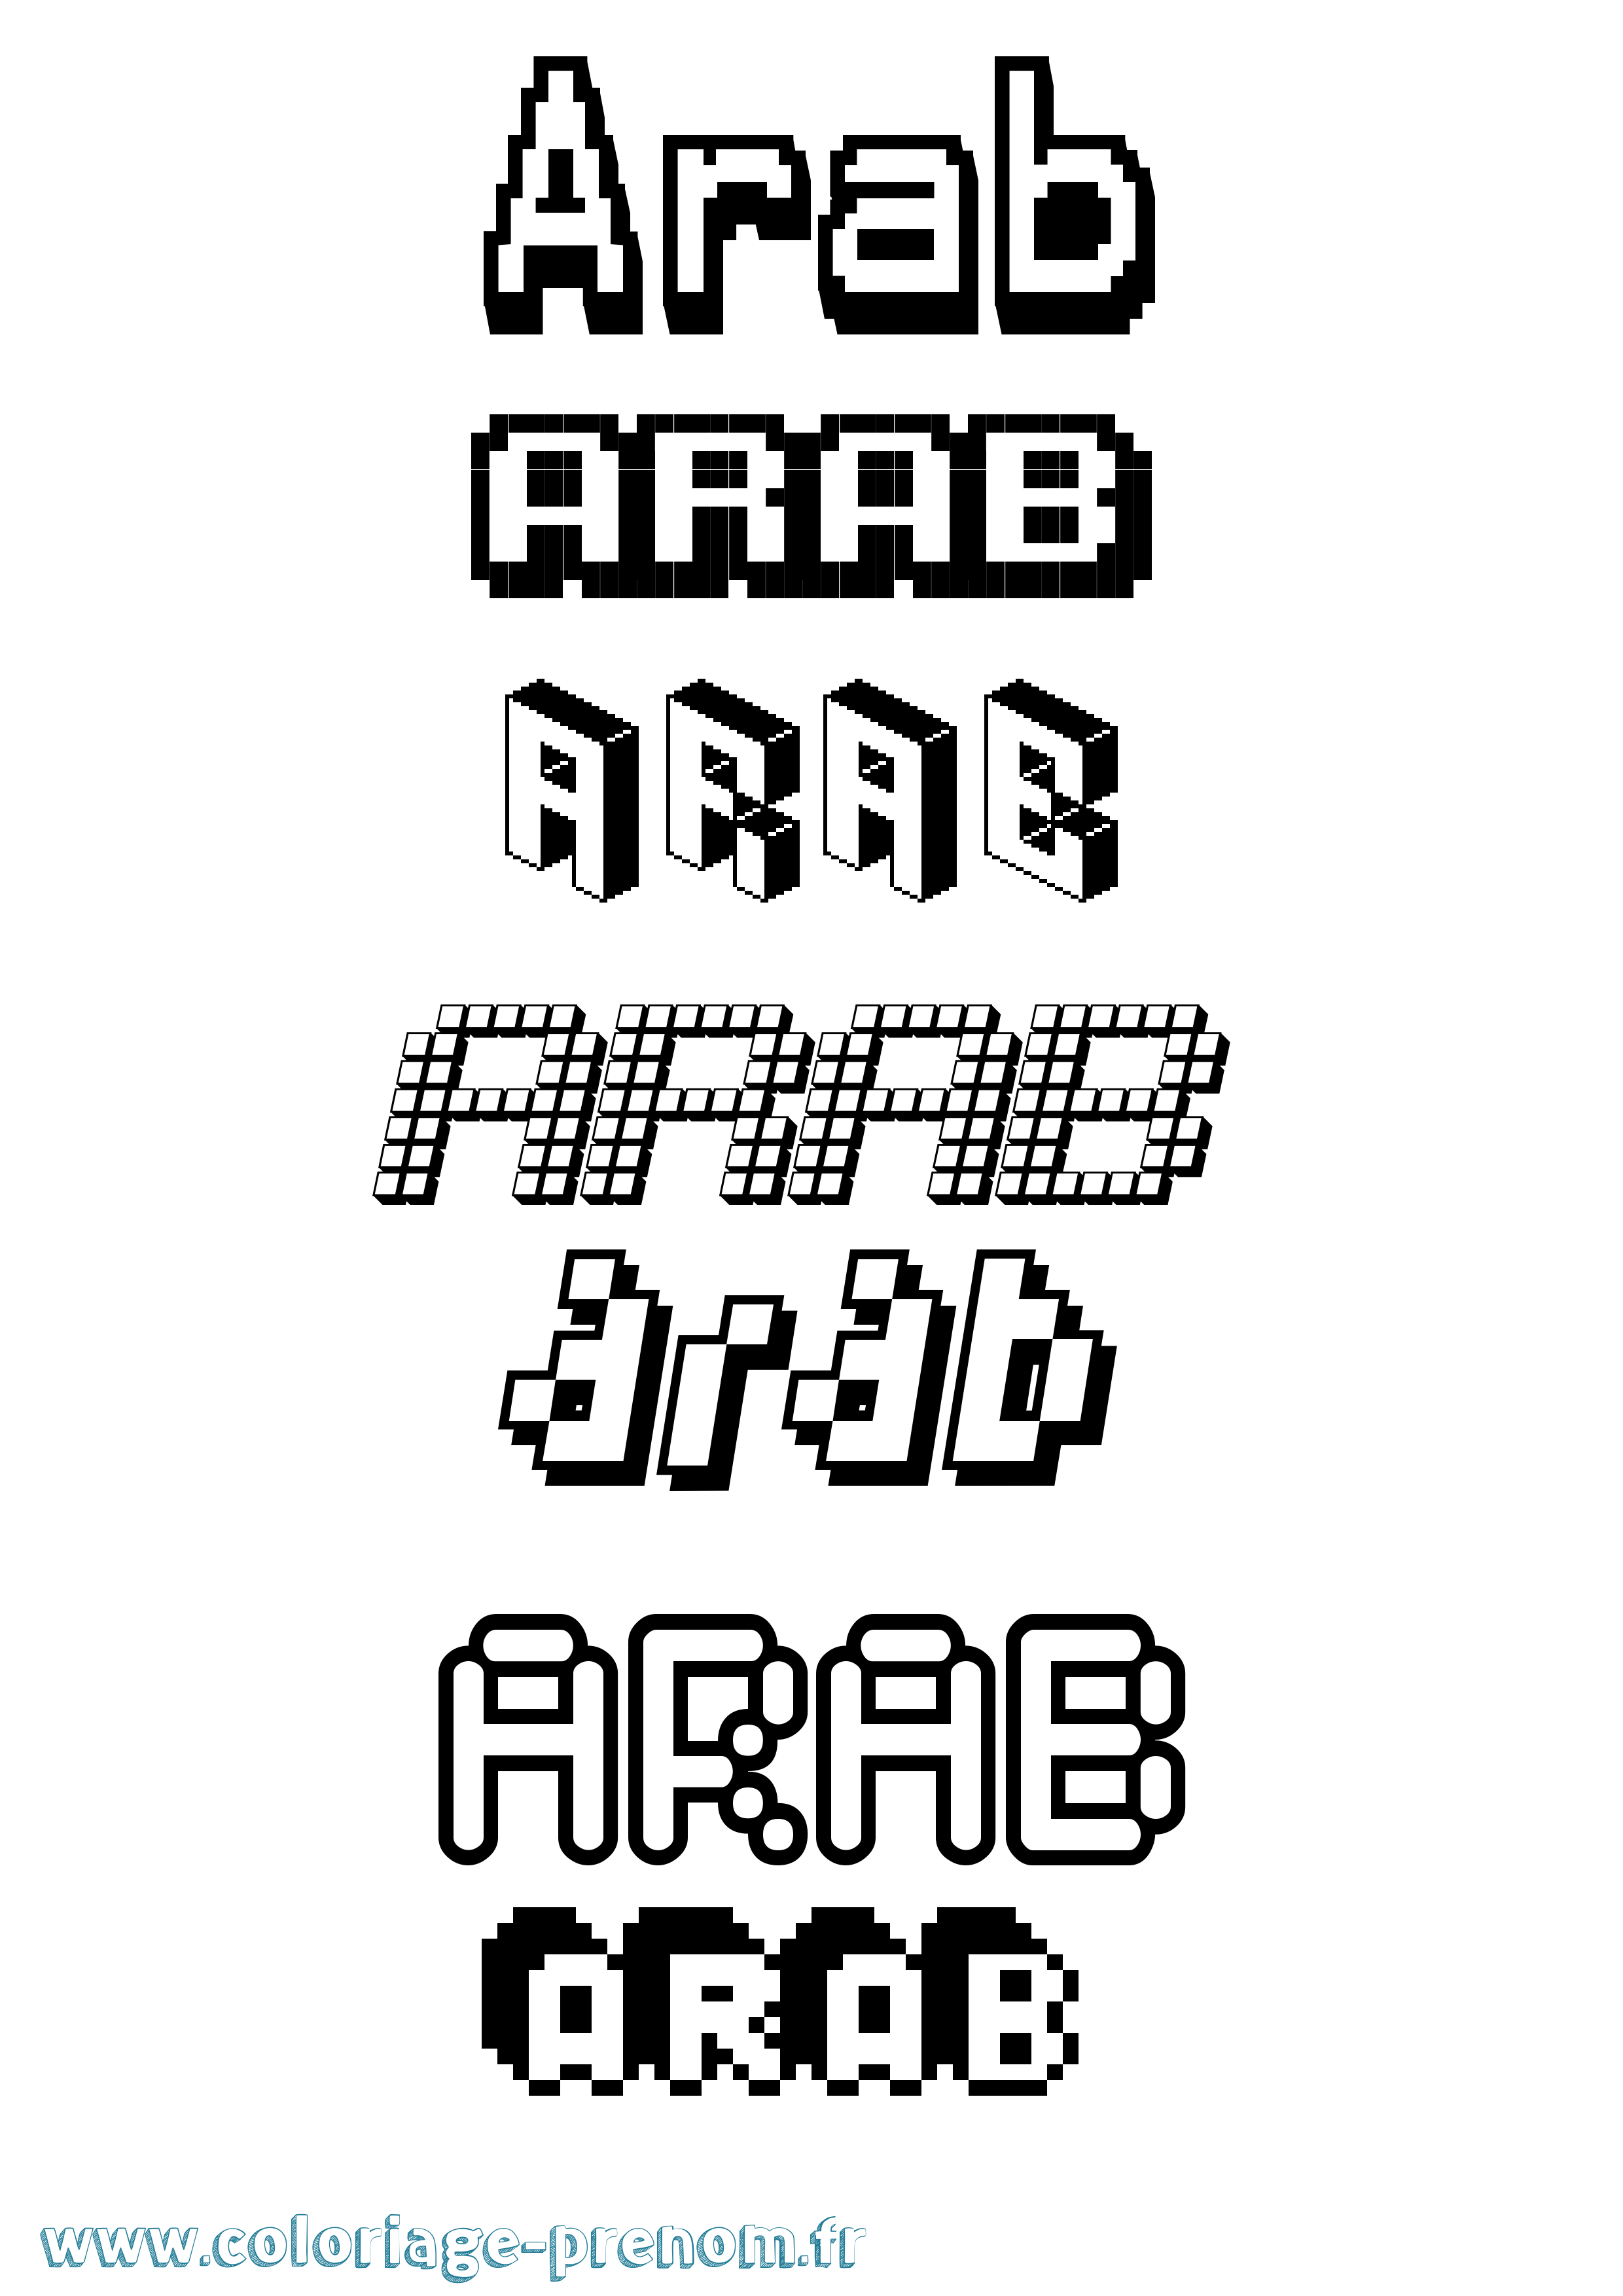 Coloriage prénom Arab Pixel